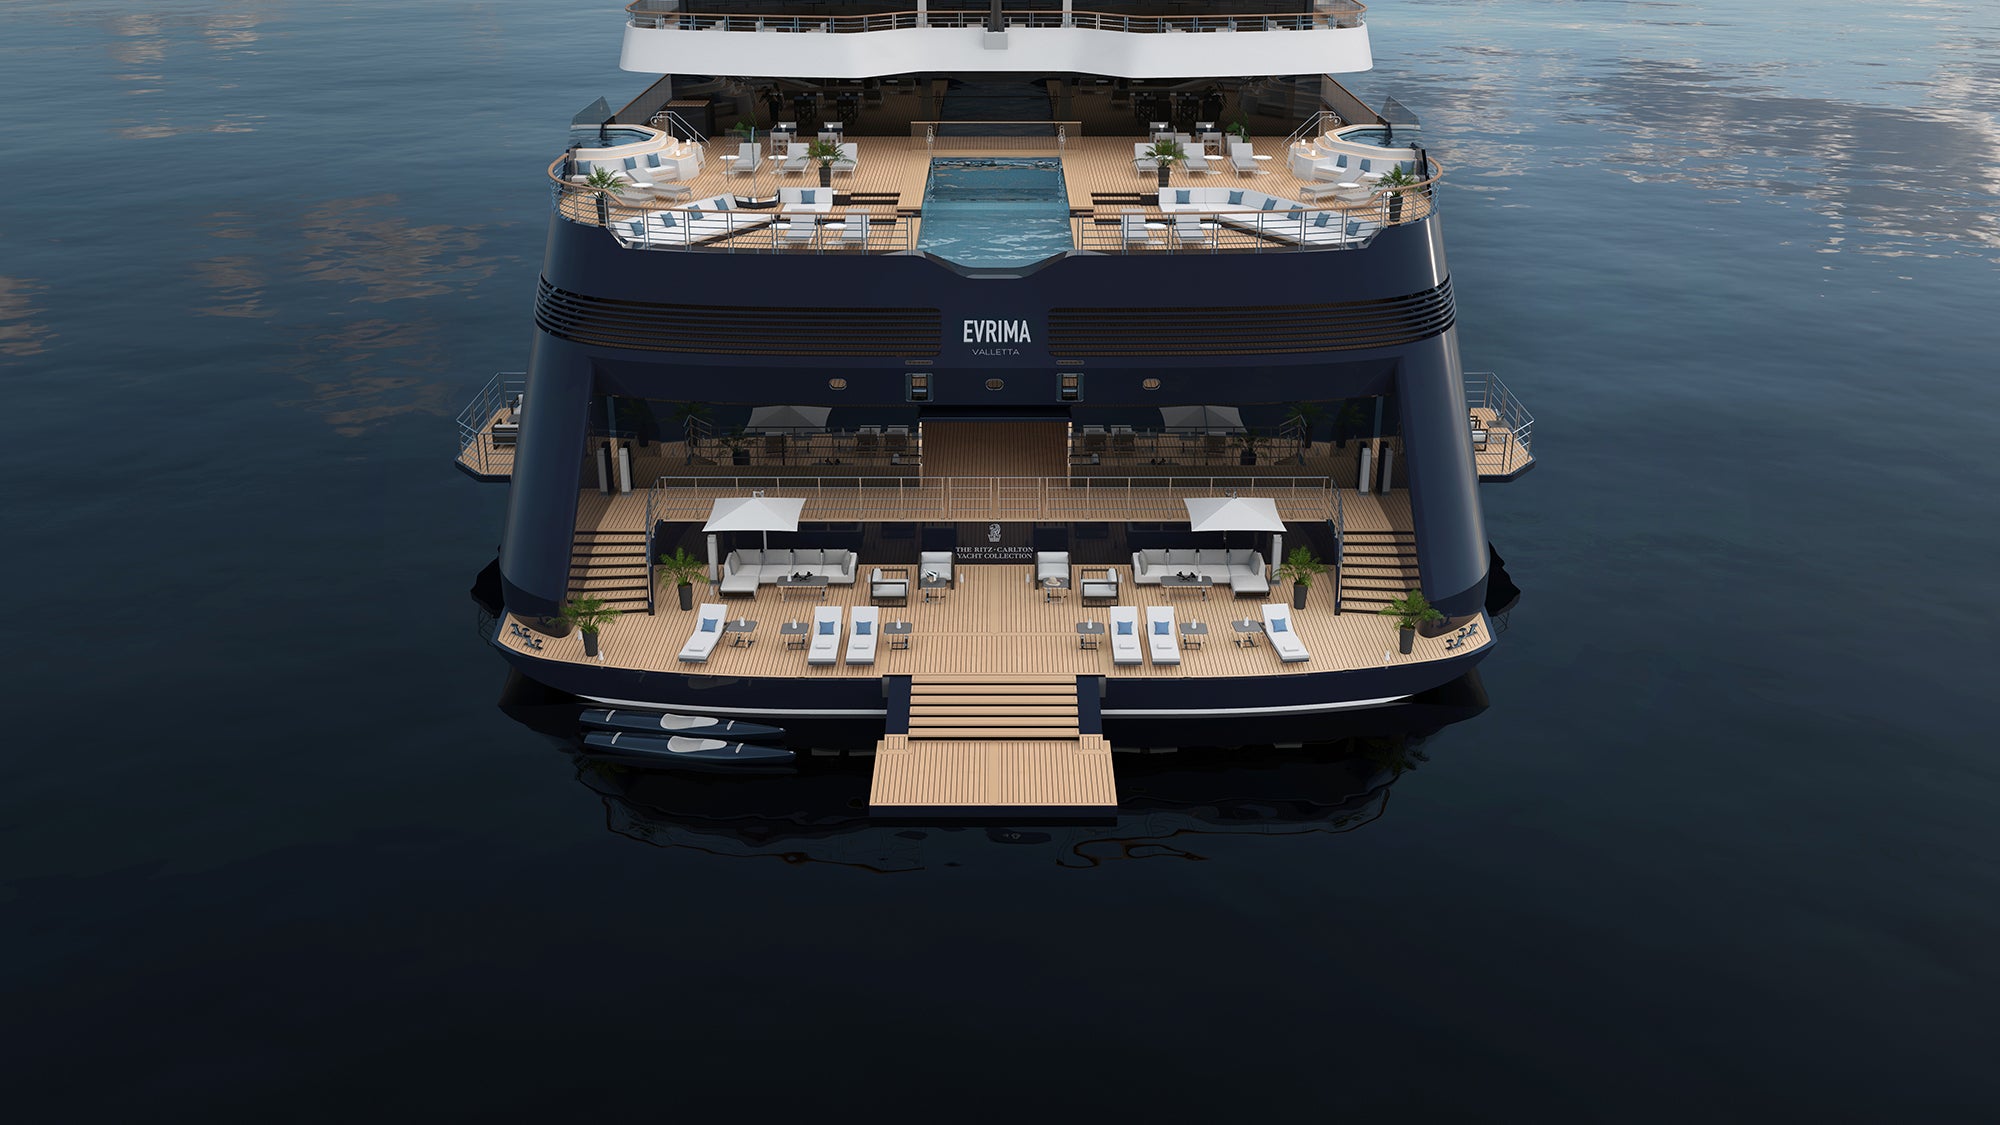 yacht dining room